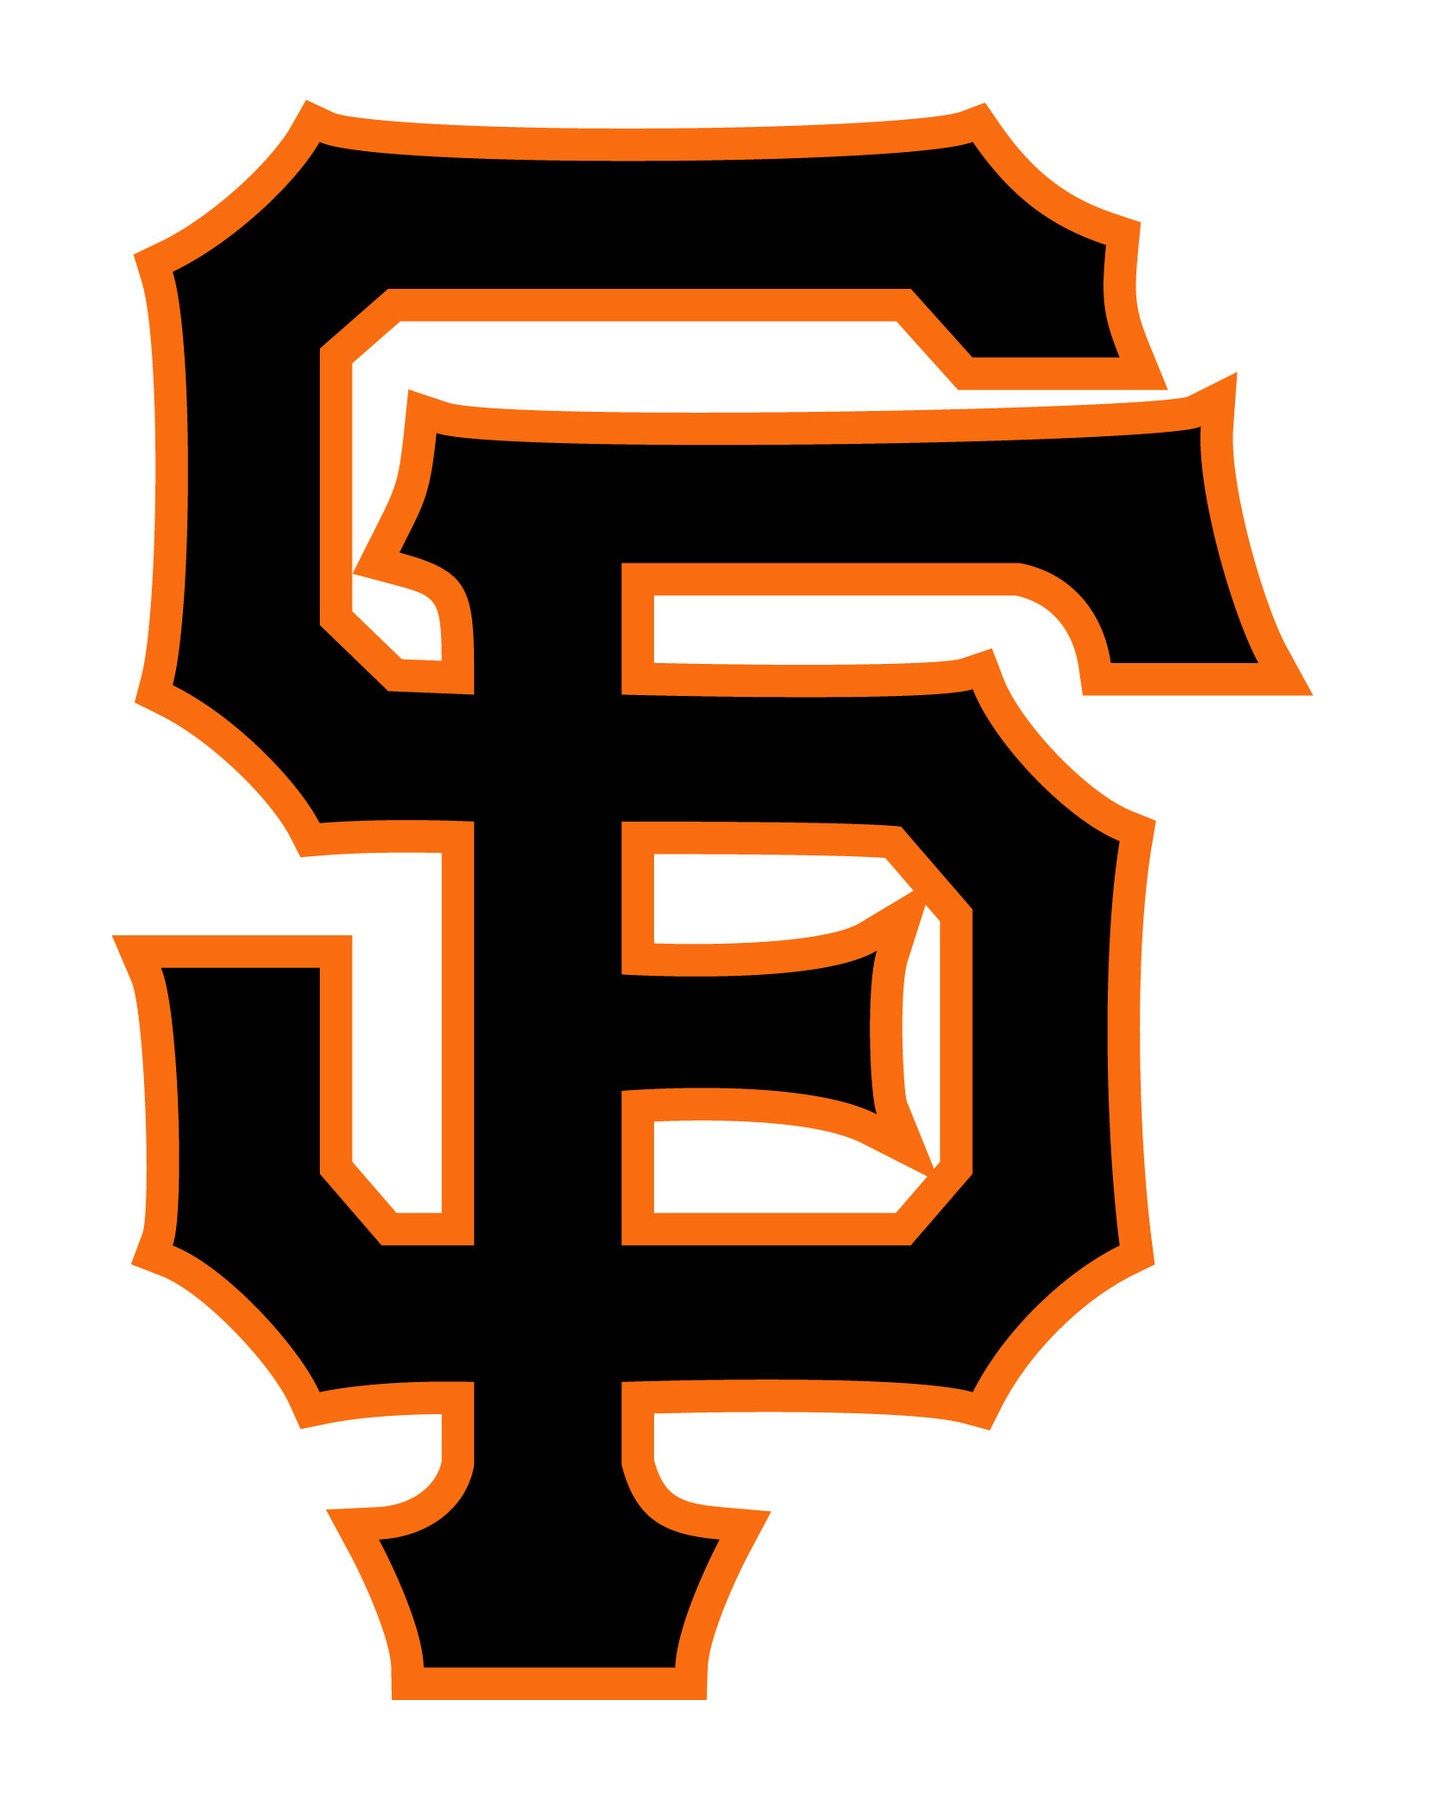 San Francisco Giants Logo Wallpapers